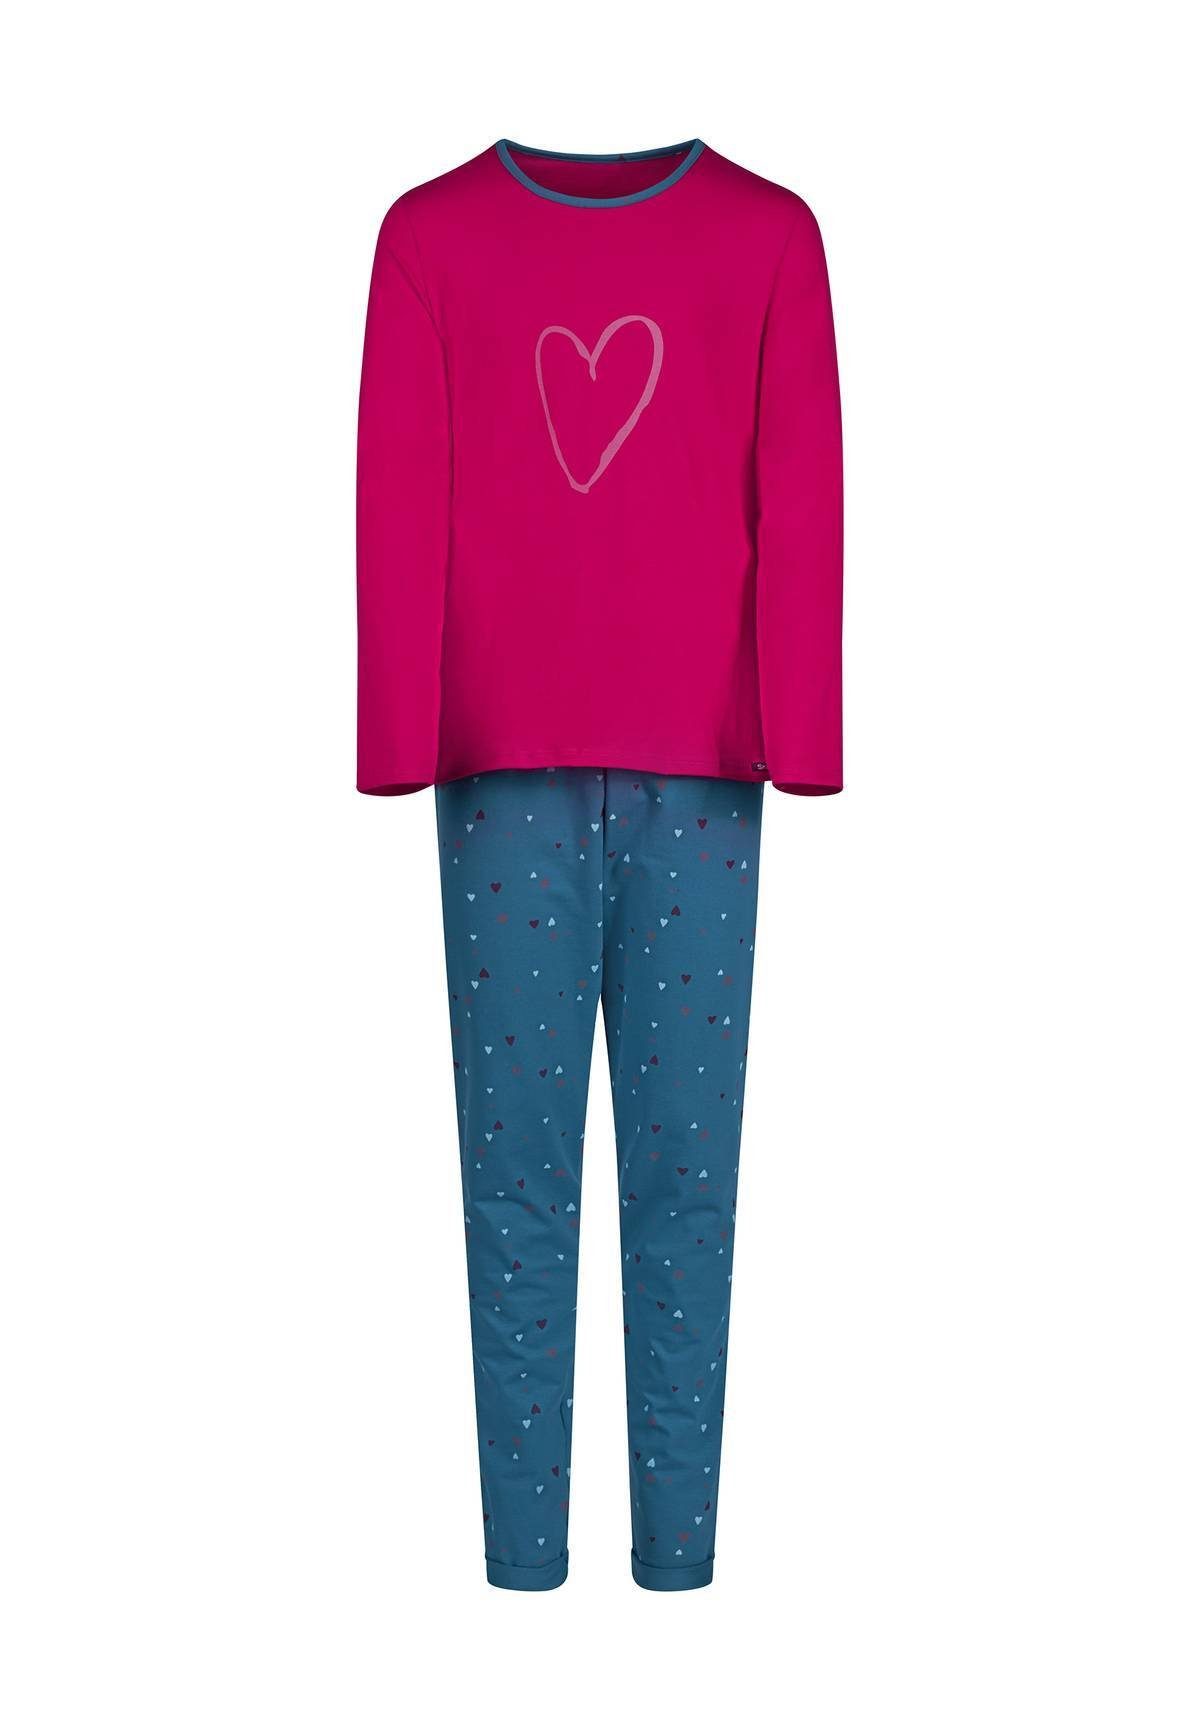 Skiny Mädchen - lang, Kinder, Schlafanzug Set Pyjama Pink/Blau 2-tlg.